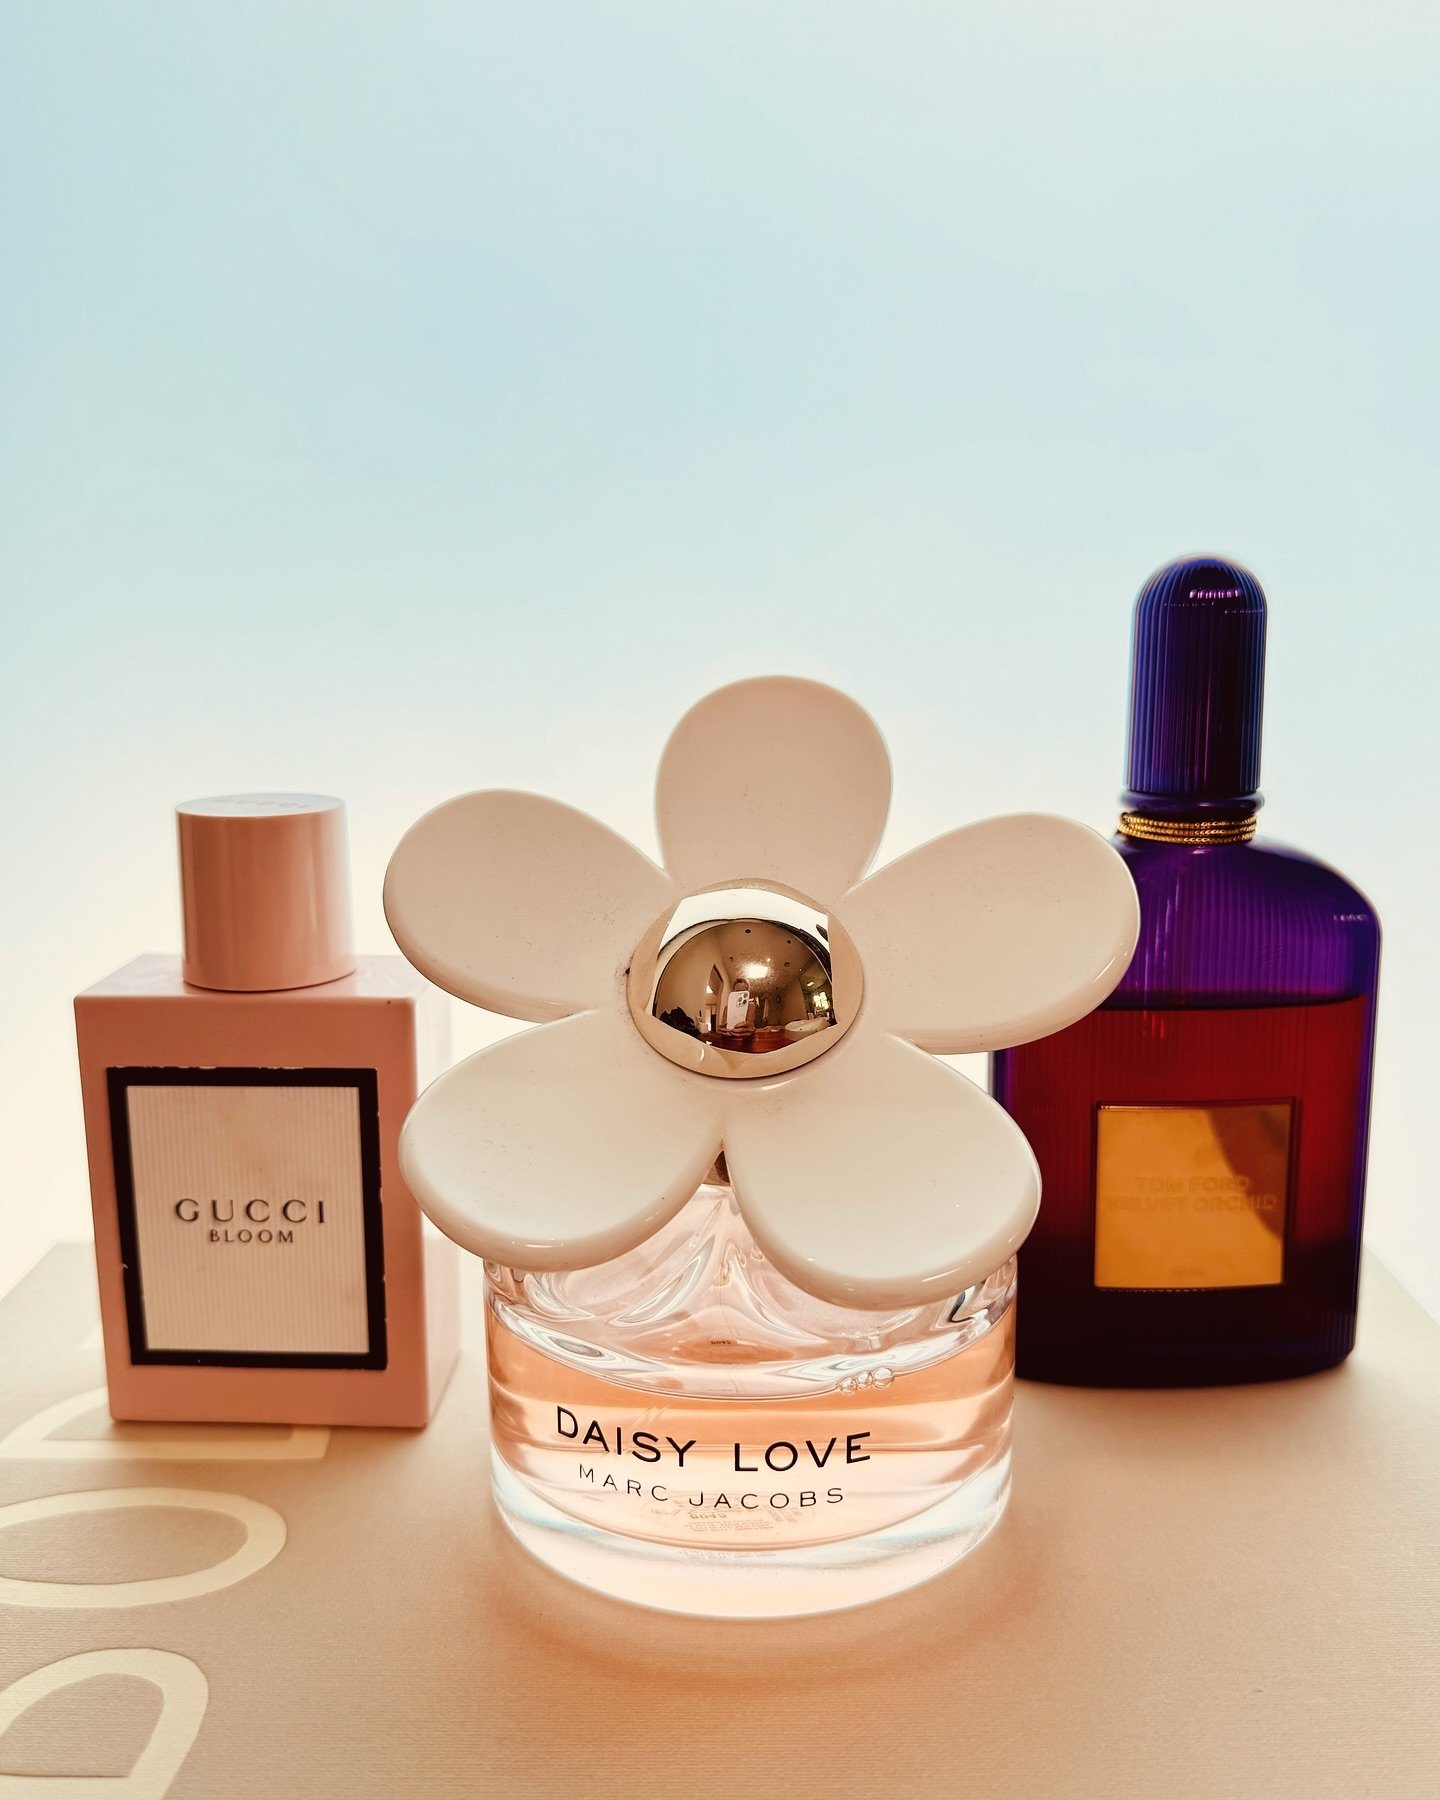 Give Unexpected HUGS all weekend. 💛
#guccibloom #marcjacobsperfume #daisylove #tomfordperfume #velvetorchid